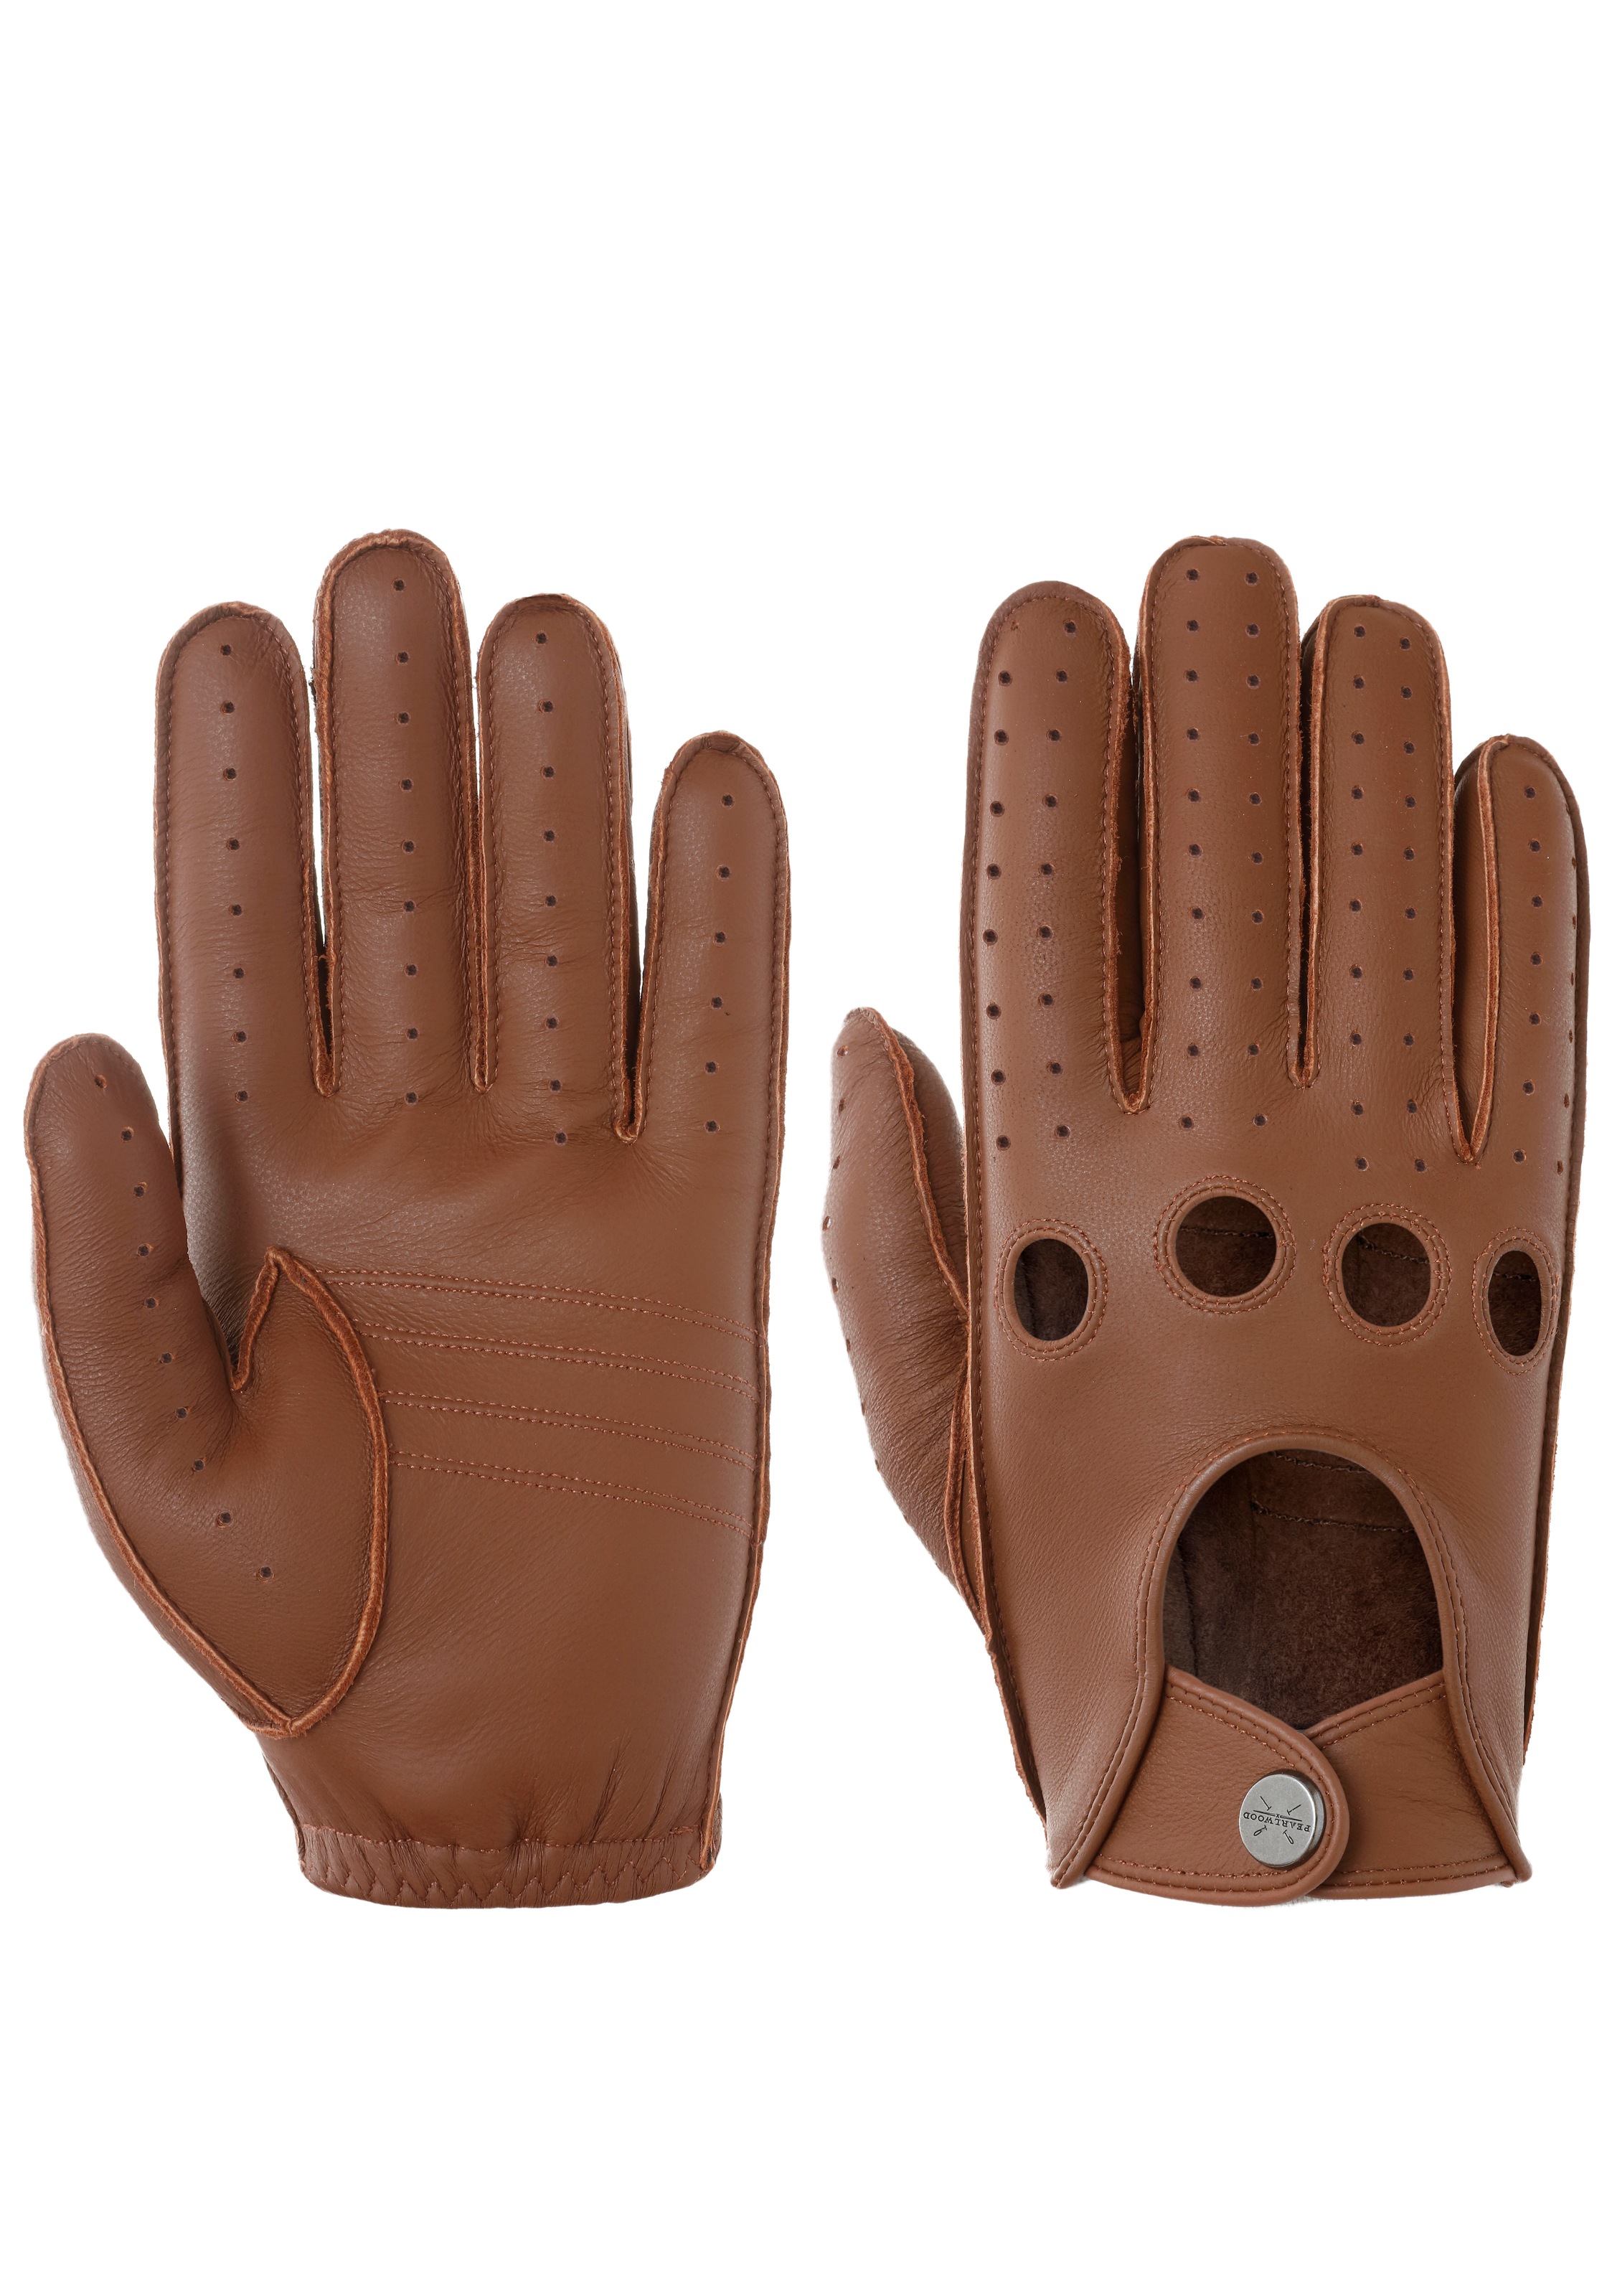 PEARLWOOD Lederhandschuhe, Autofahrerhandschuhe, sicherer Griff bei feuchten Händen